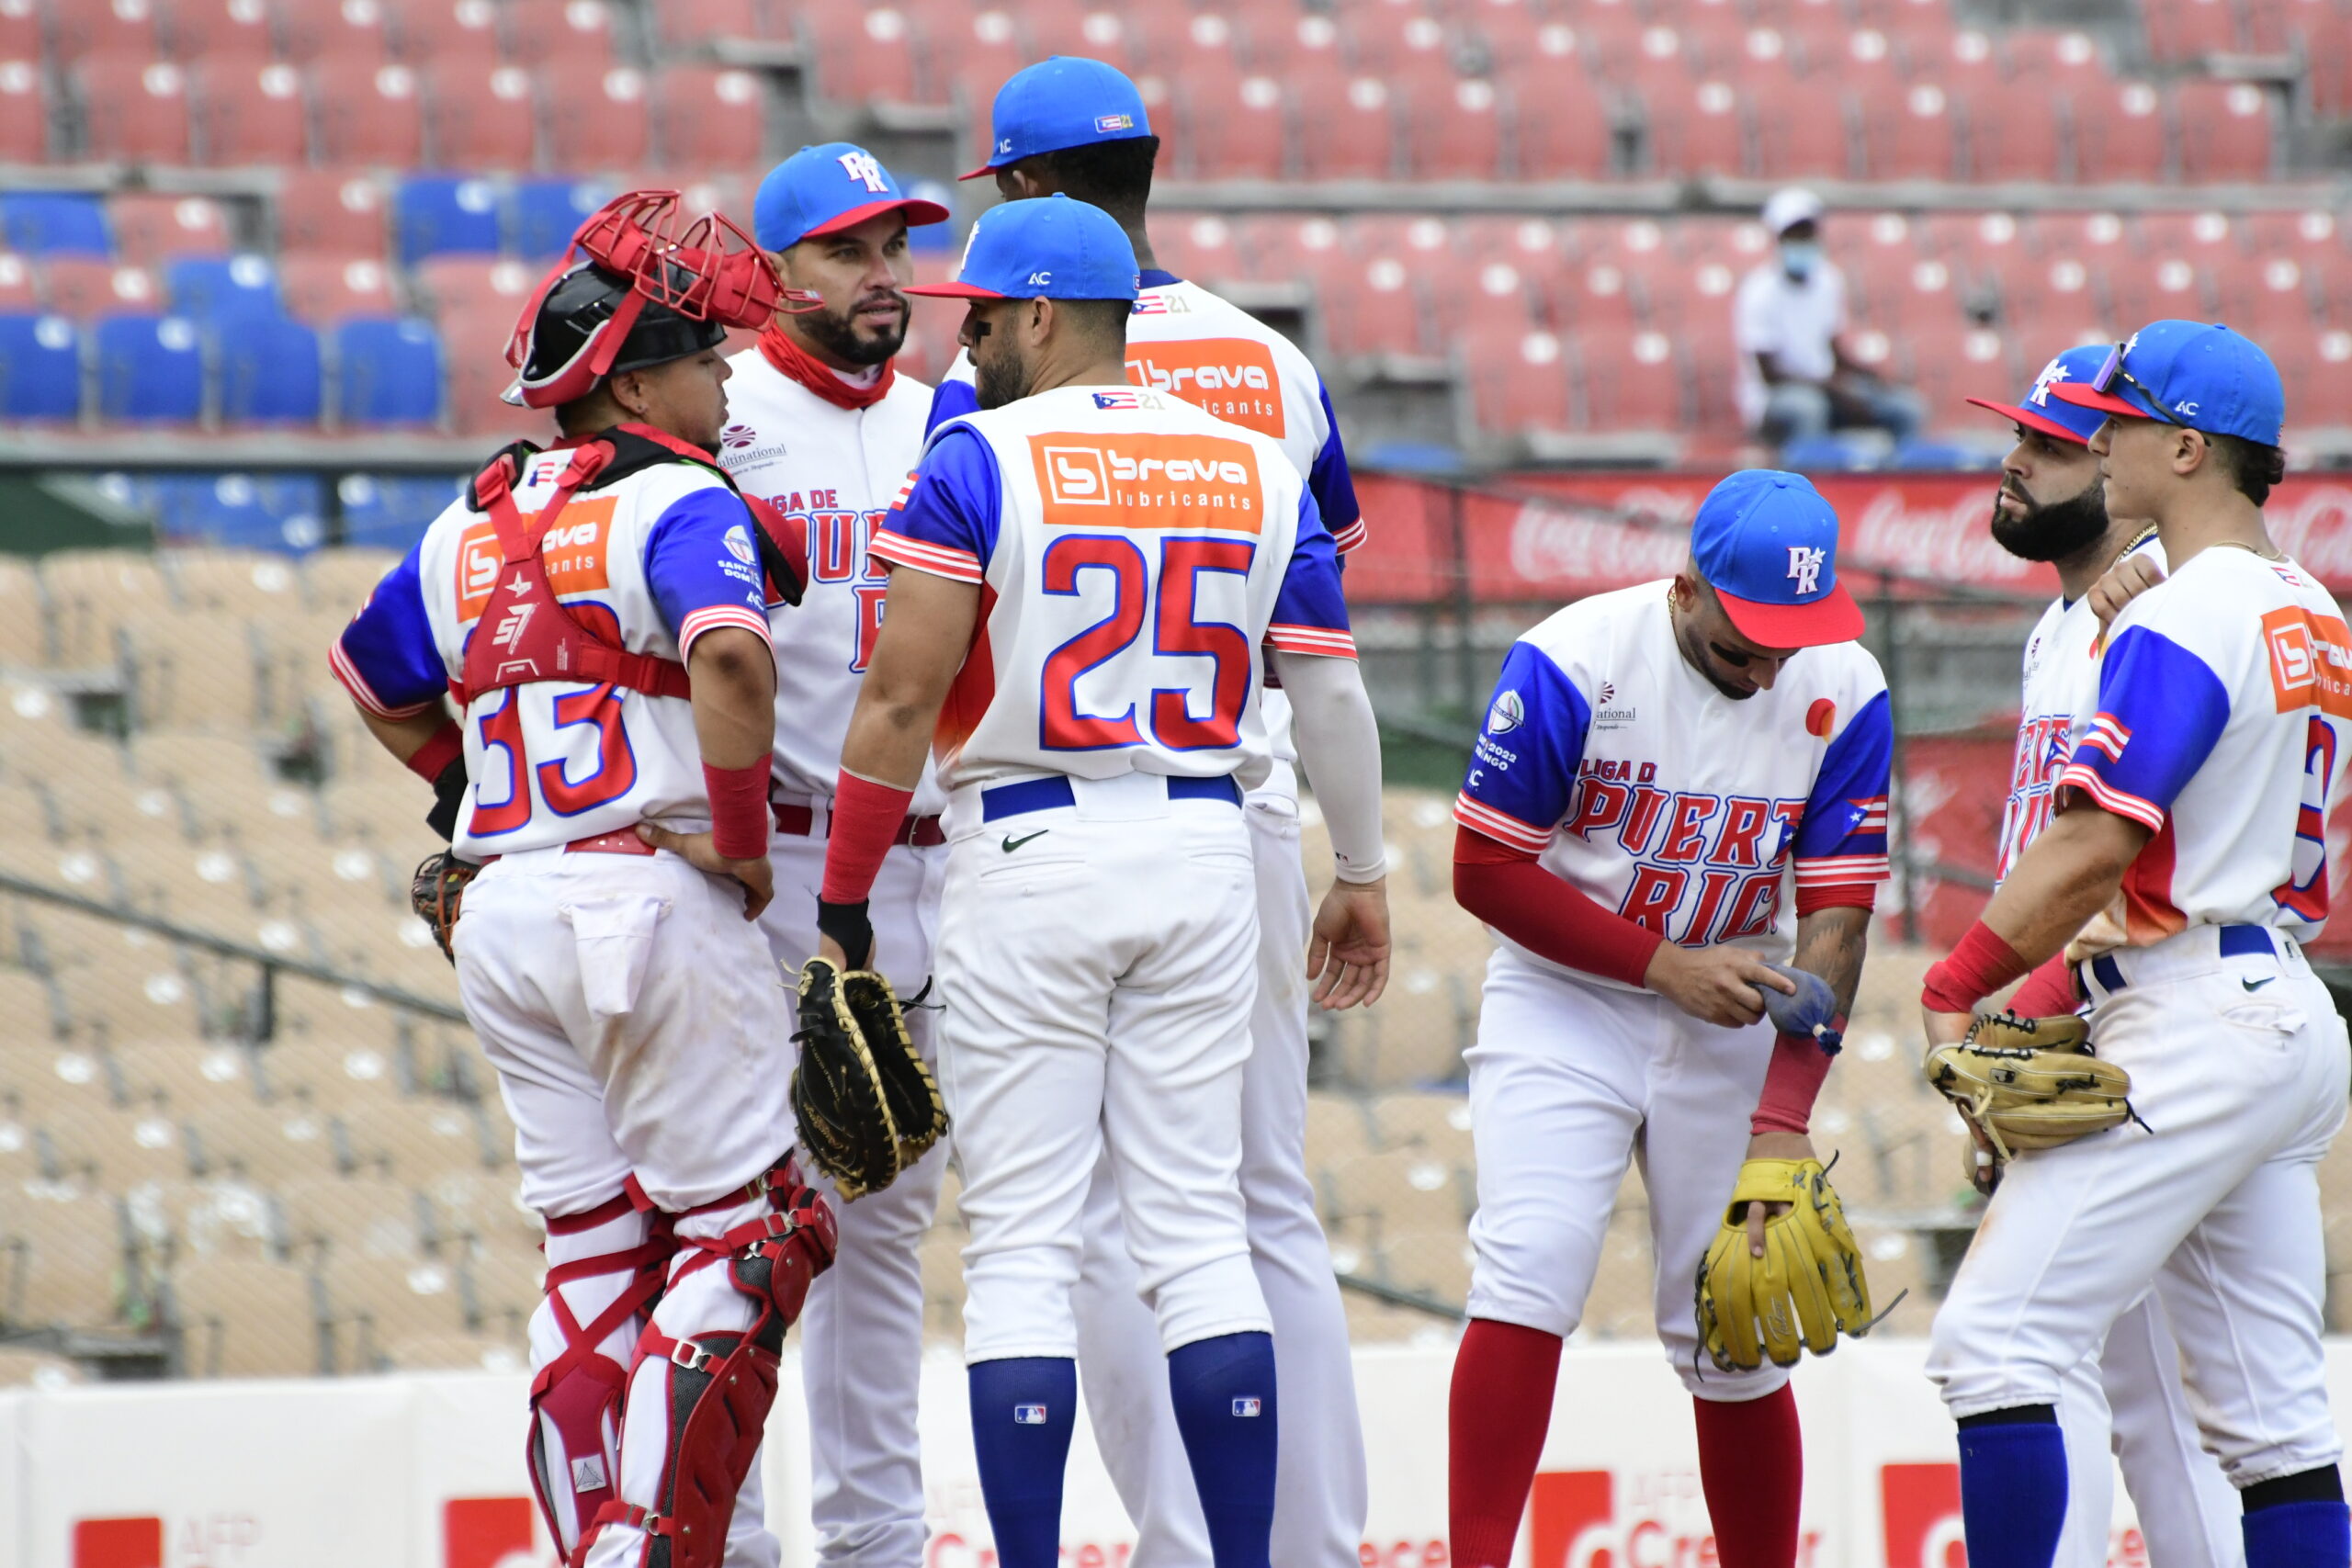  Jersey Baseball Puerto Rico Serie del Caribe (as1